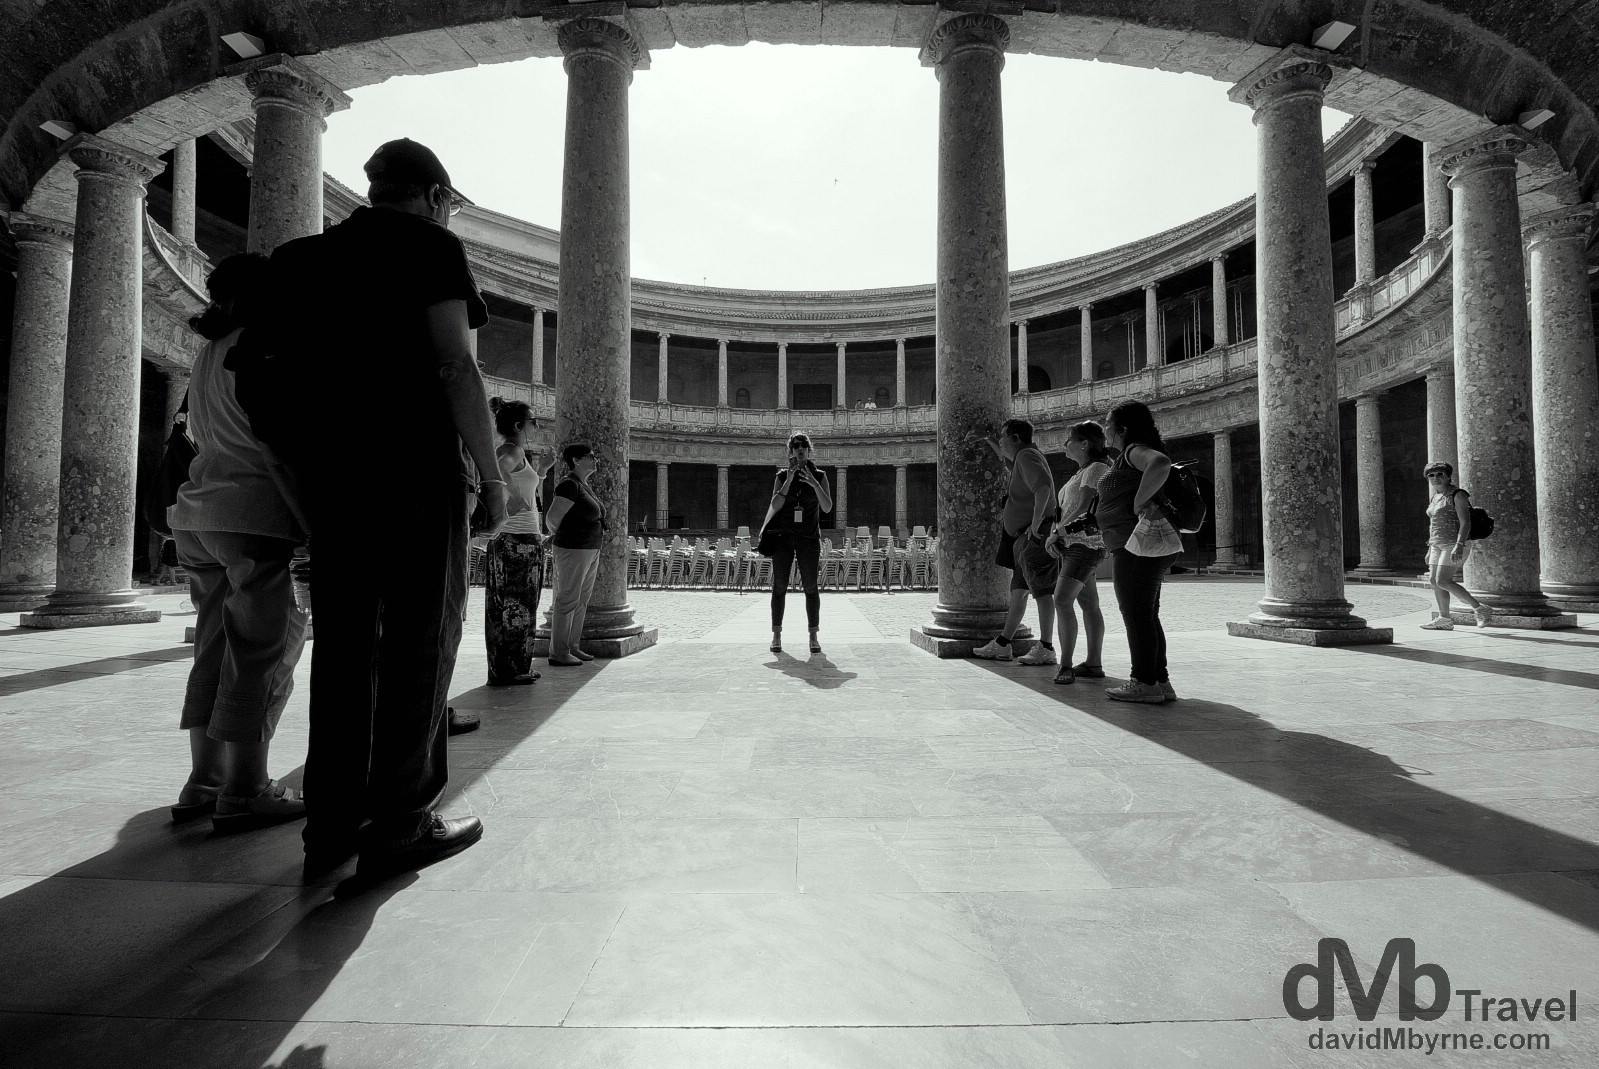 Tour group shadows in Palacio de Carlos V in the Alhambra in Granada, Andalusia, Spain. June 11th, 2014.